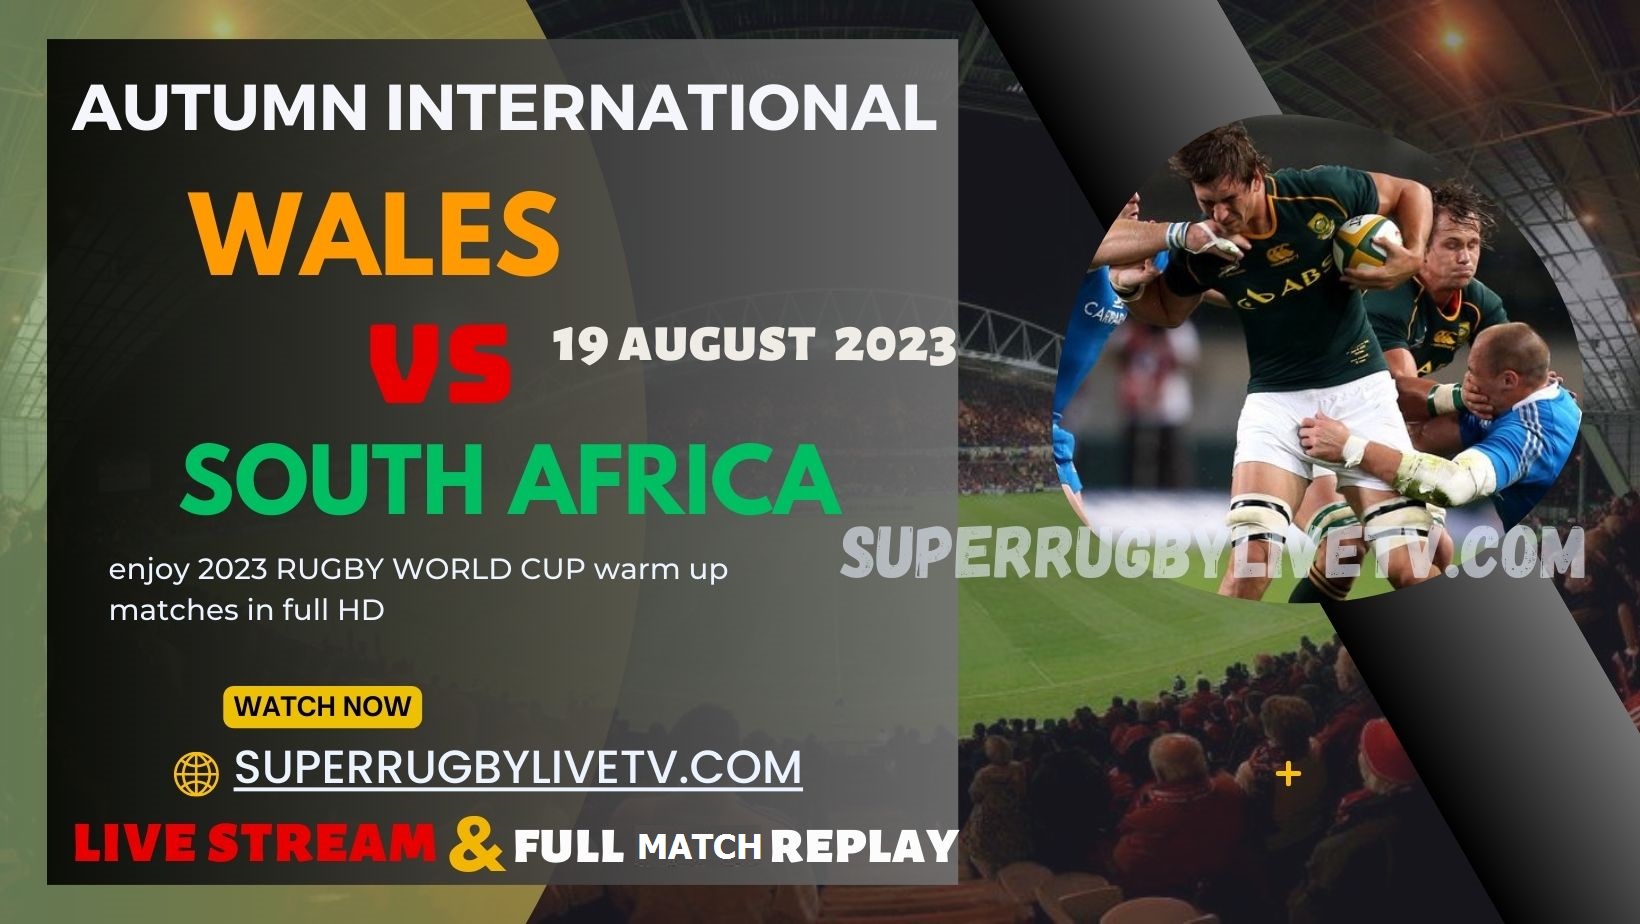 springboks-vs-wales-autumn-internationals-rugby-live-stream